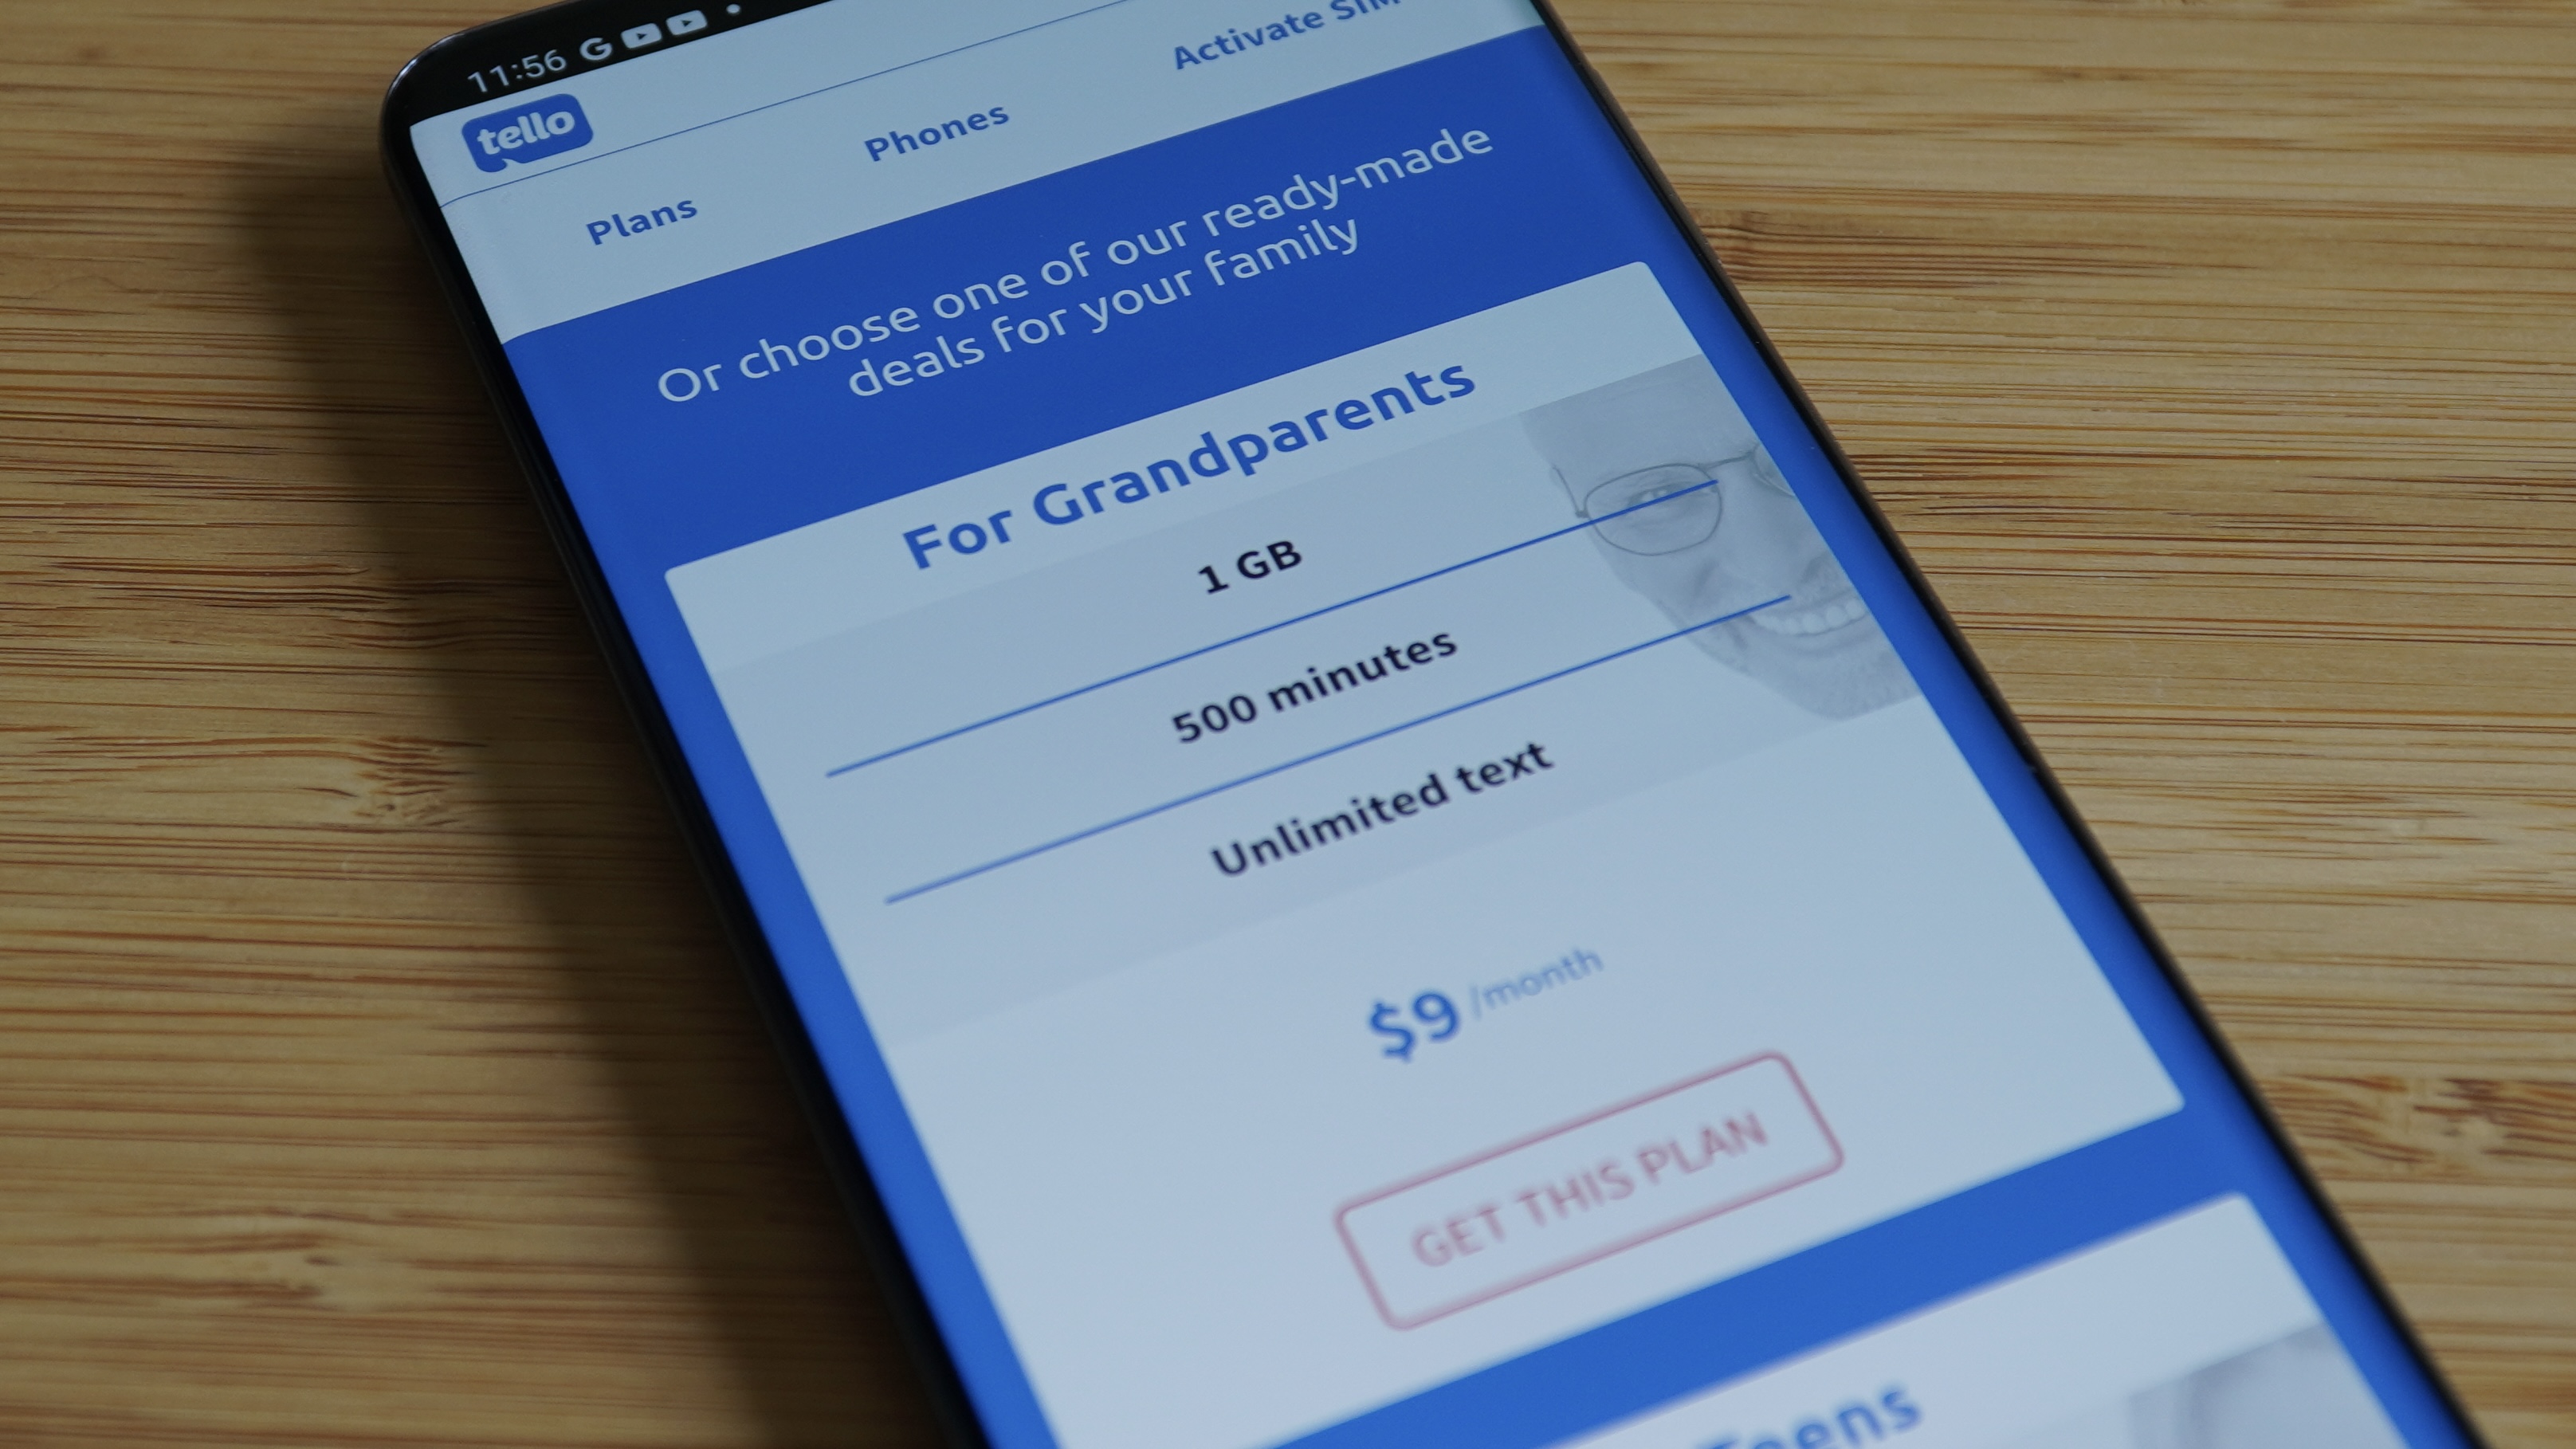 Tello Mobile 1GB grandparents plan in phone web browser